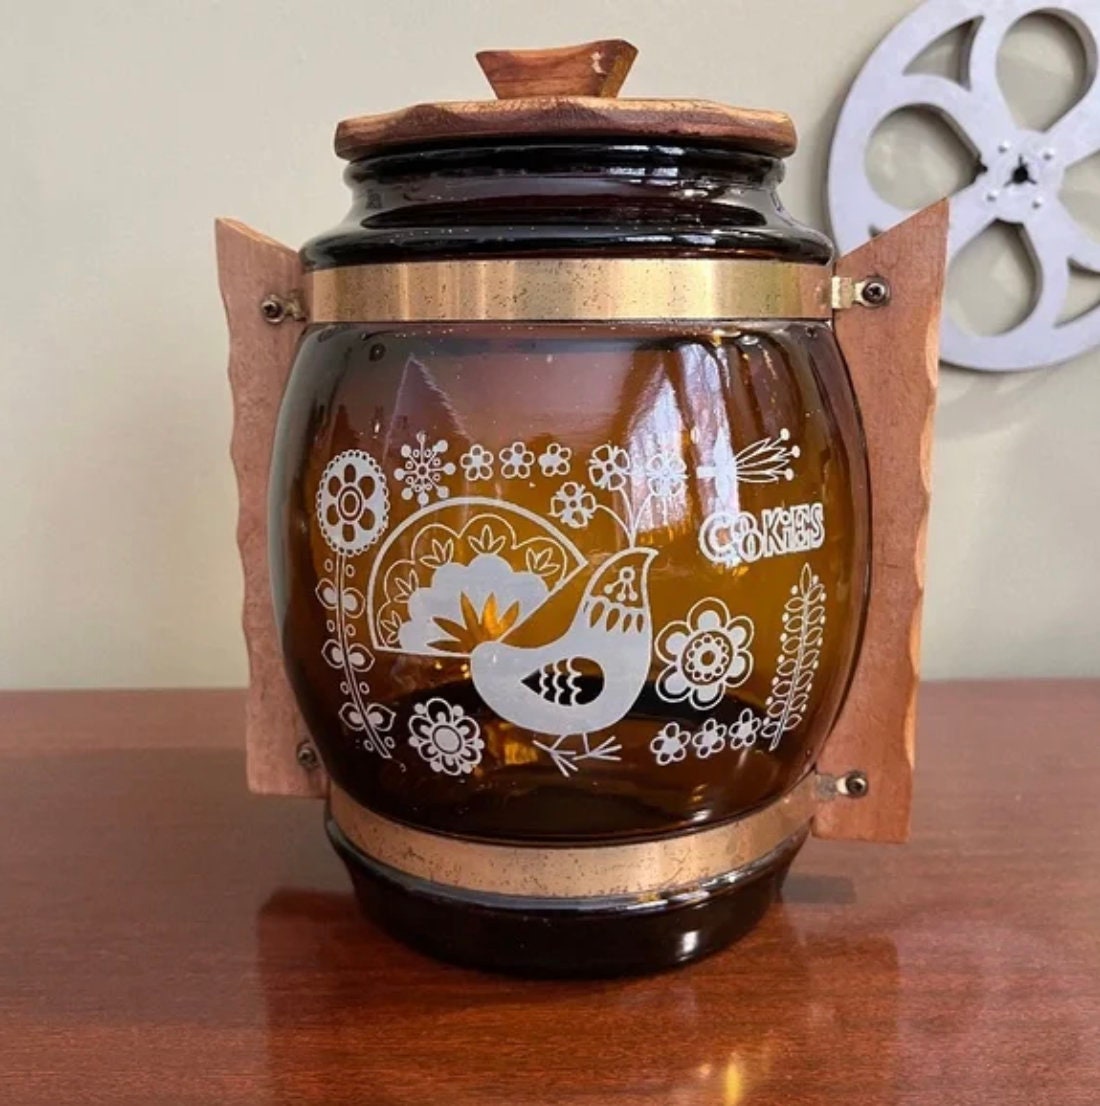 70s ceramics: cookie jar, burst